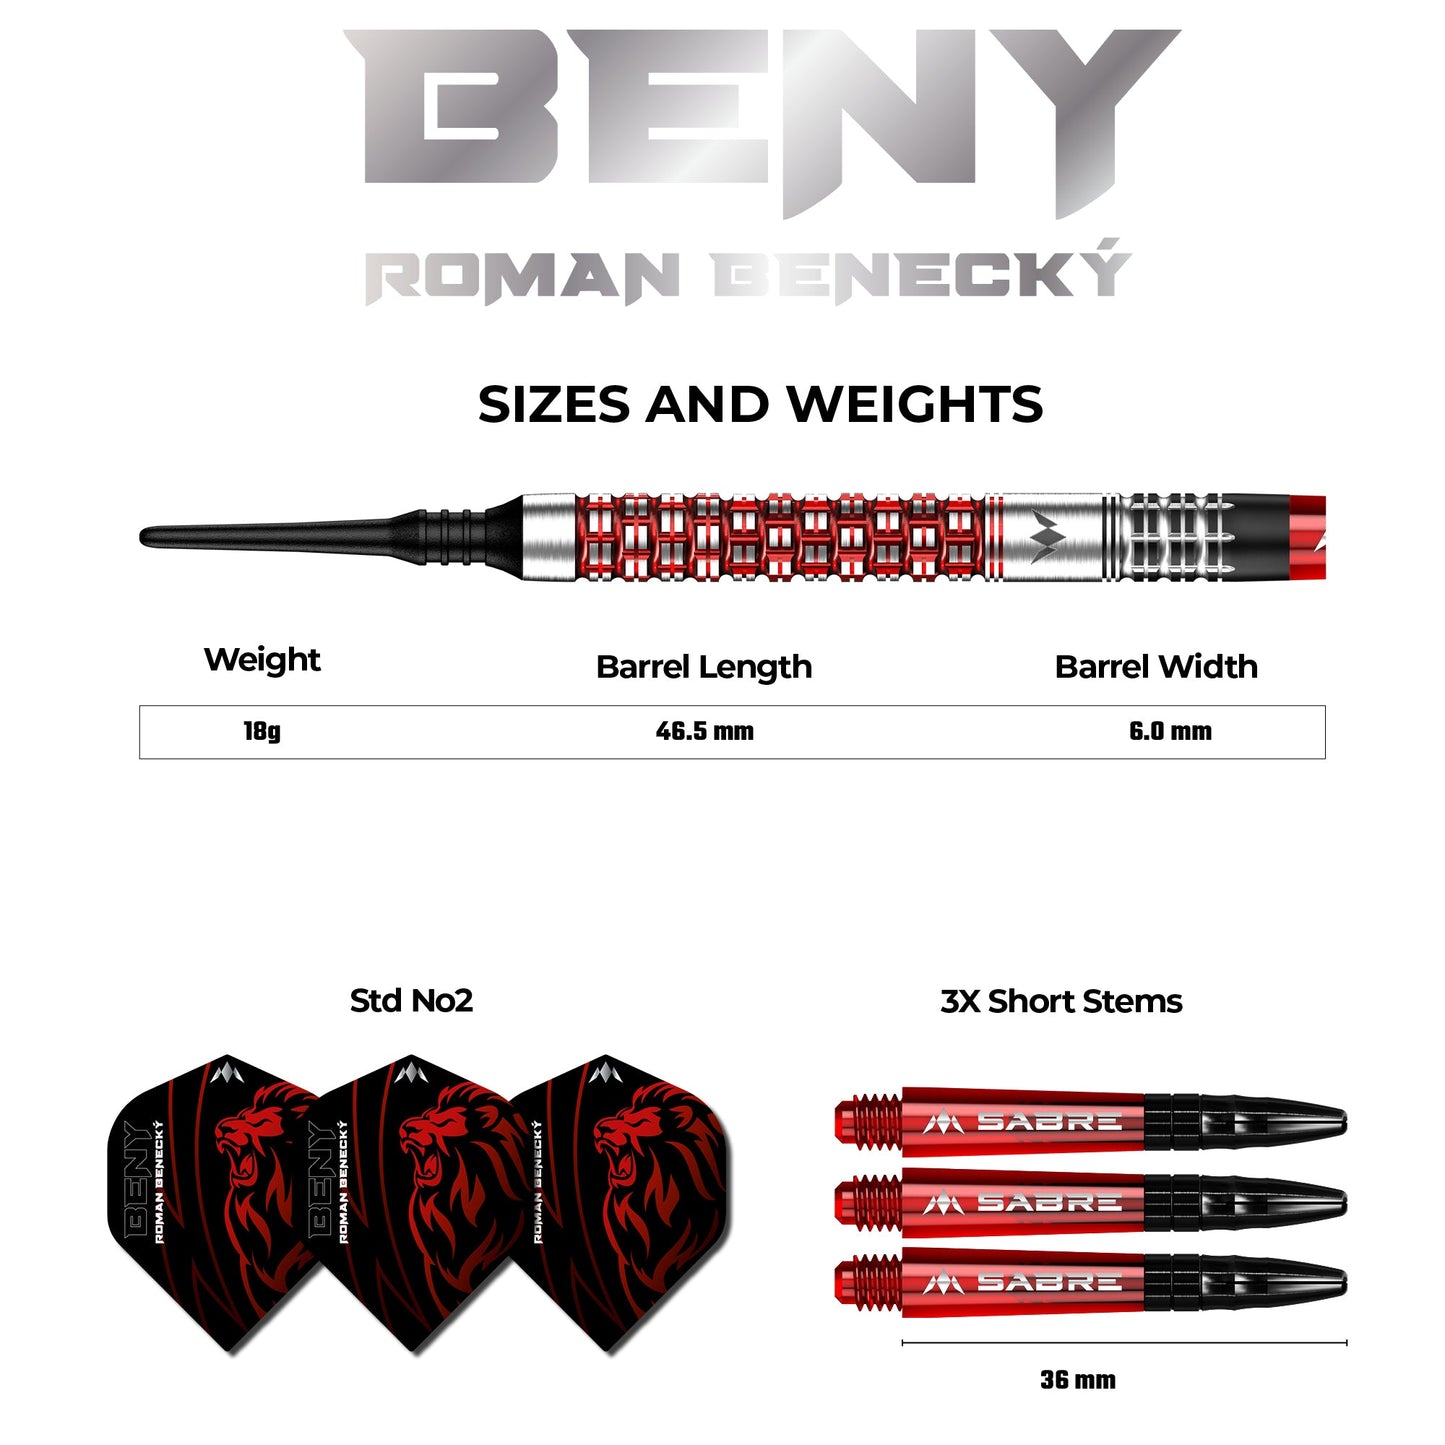 Mission Roman Benecky Darts - Soft Tip - Black & Red - 18g